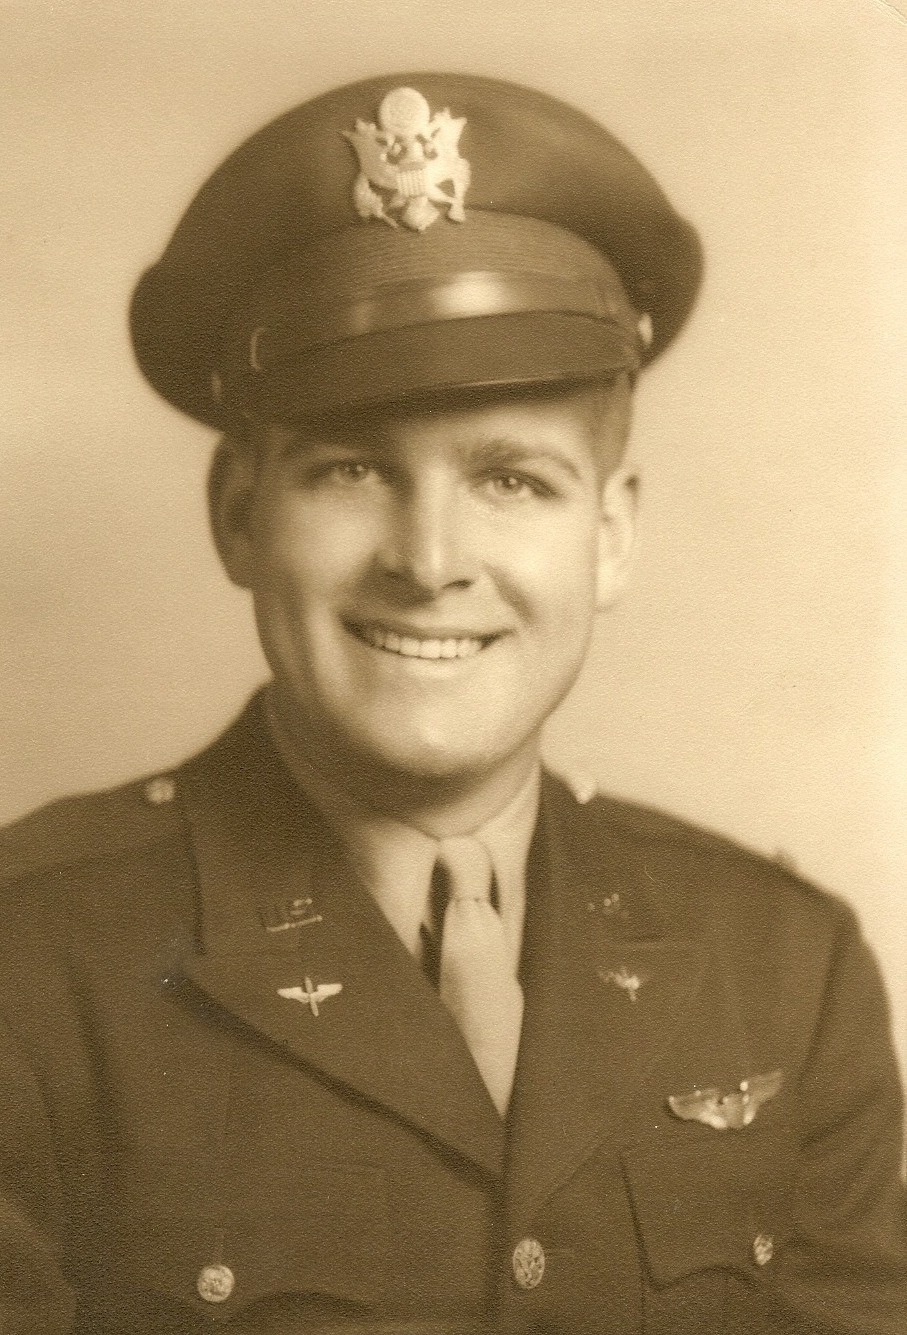 My grandfather, a B-17 pilot in WWII